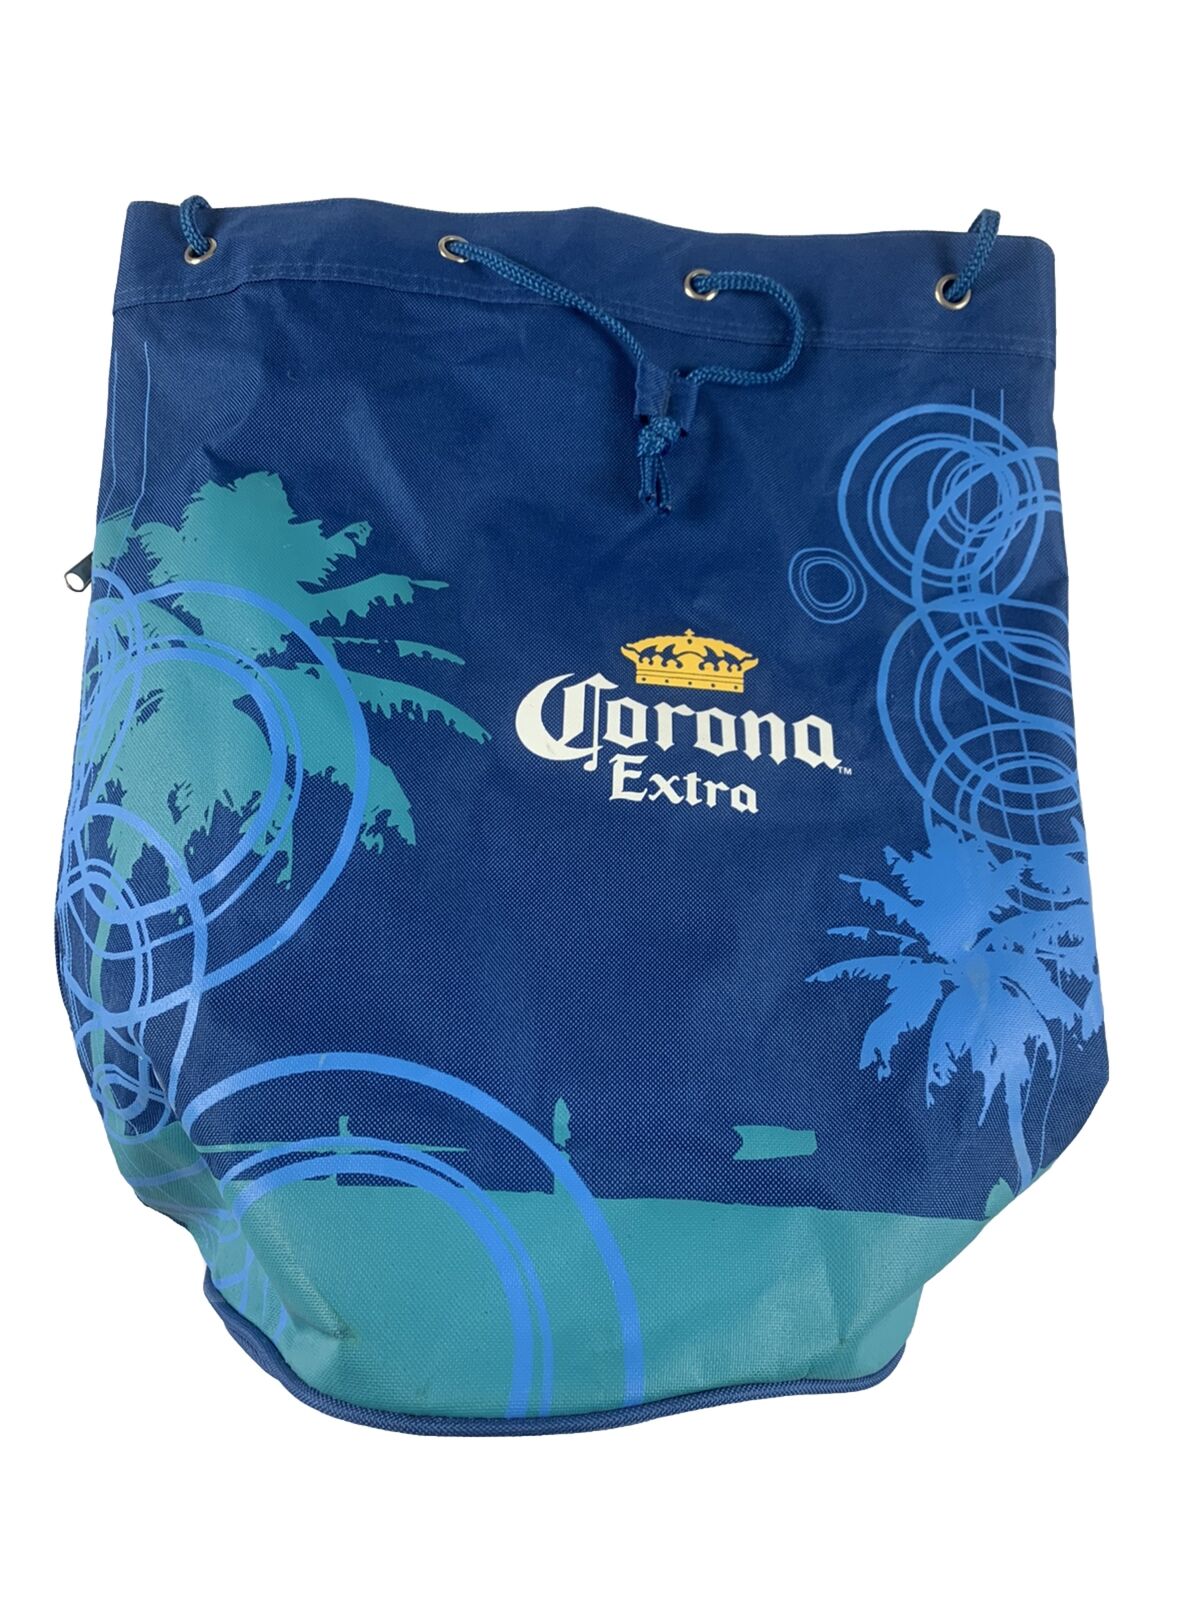 Corona Extra Backpack Bag Blue Convertible Beer Duffel